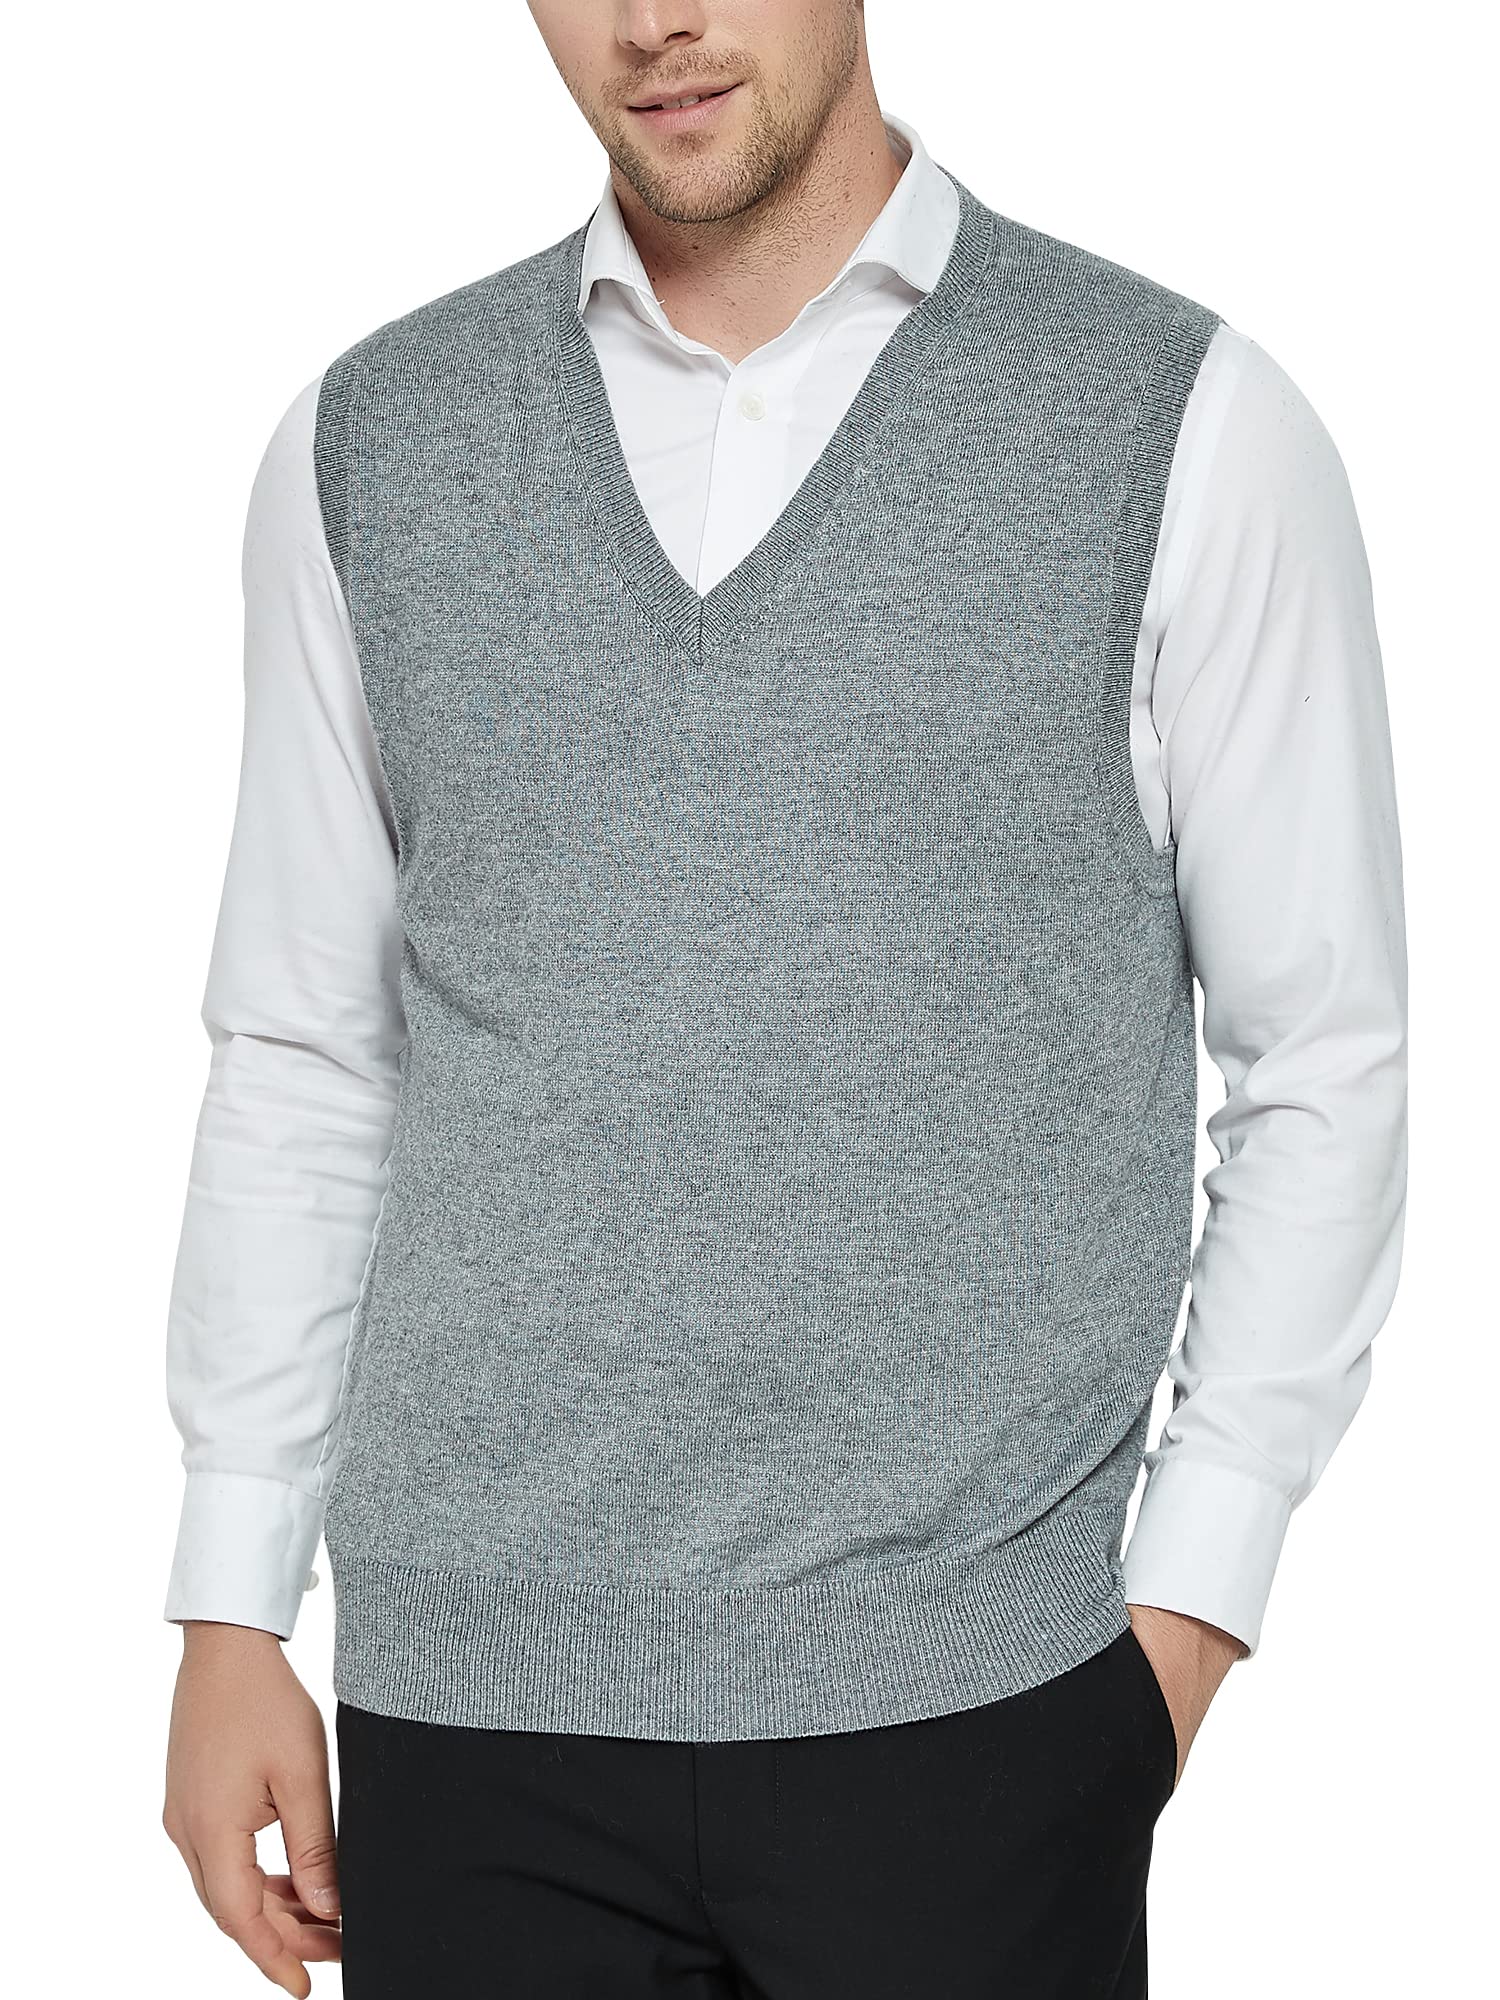 Kallspin Mens cashmere Wool Blended Vest Sweater Relaxed Fit V Neck Sleeveless Knitted Vest Pullover (Light grey, 3X-Large)